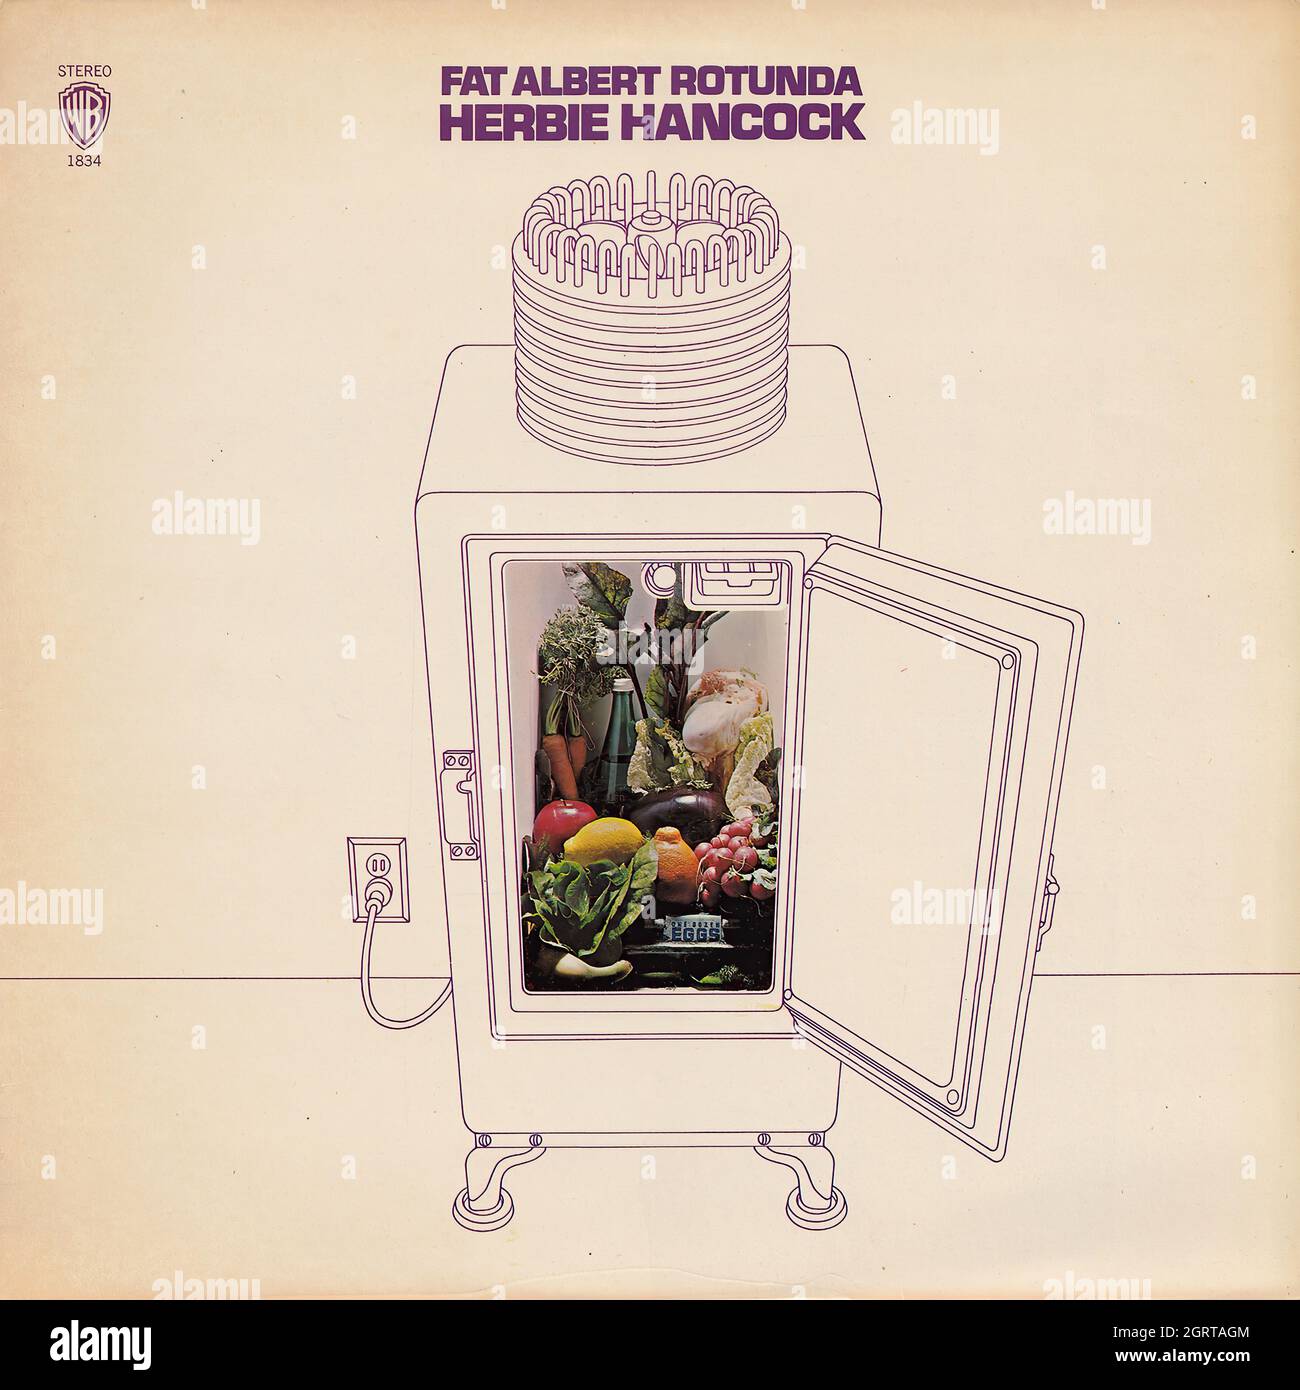 Herbie Hancock - Fat Albert rotunda - copertina Vintage Vinyl Record Foto Stock